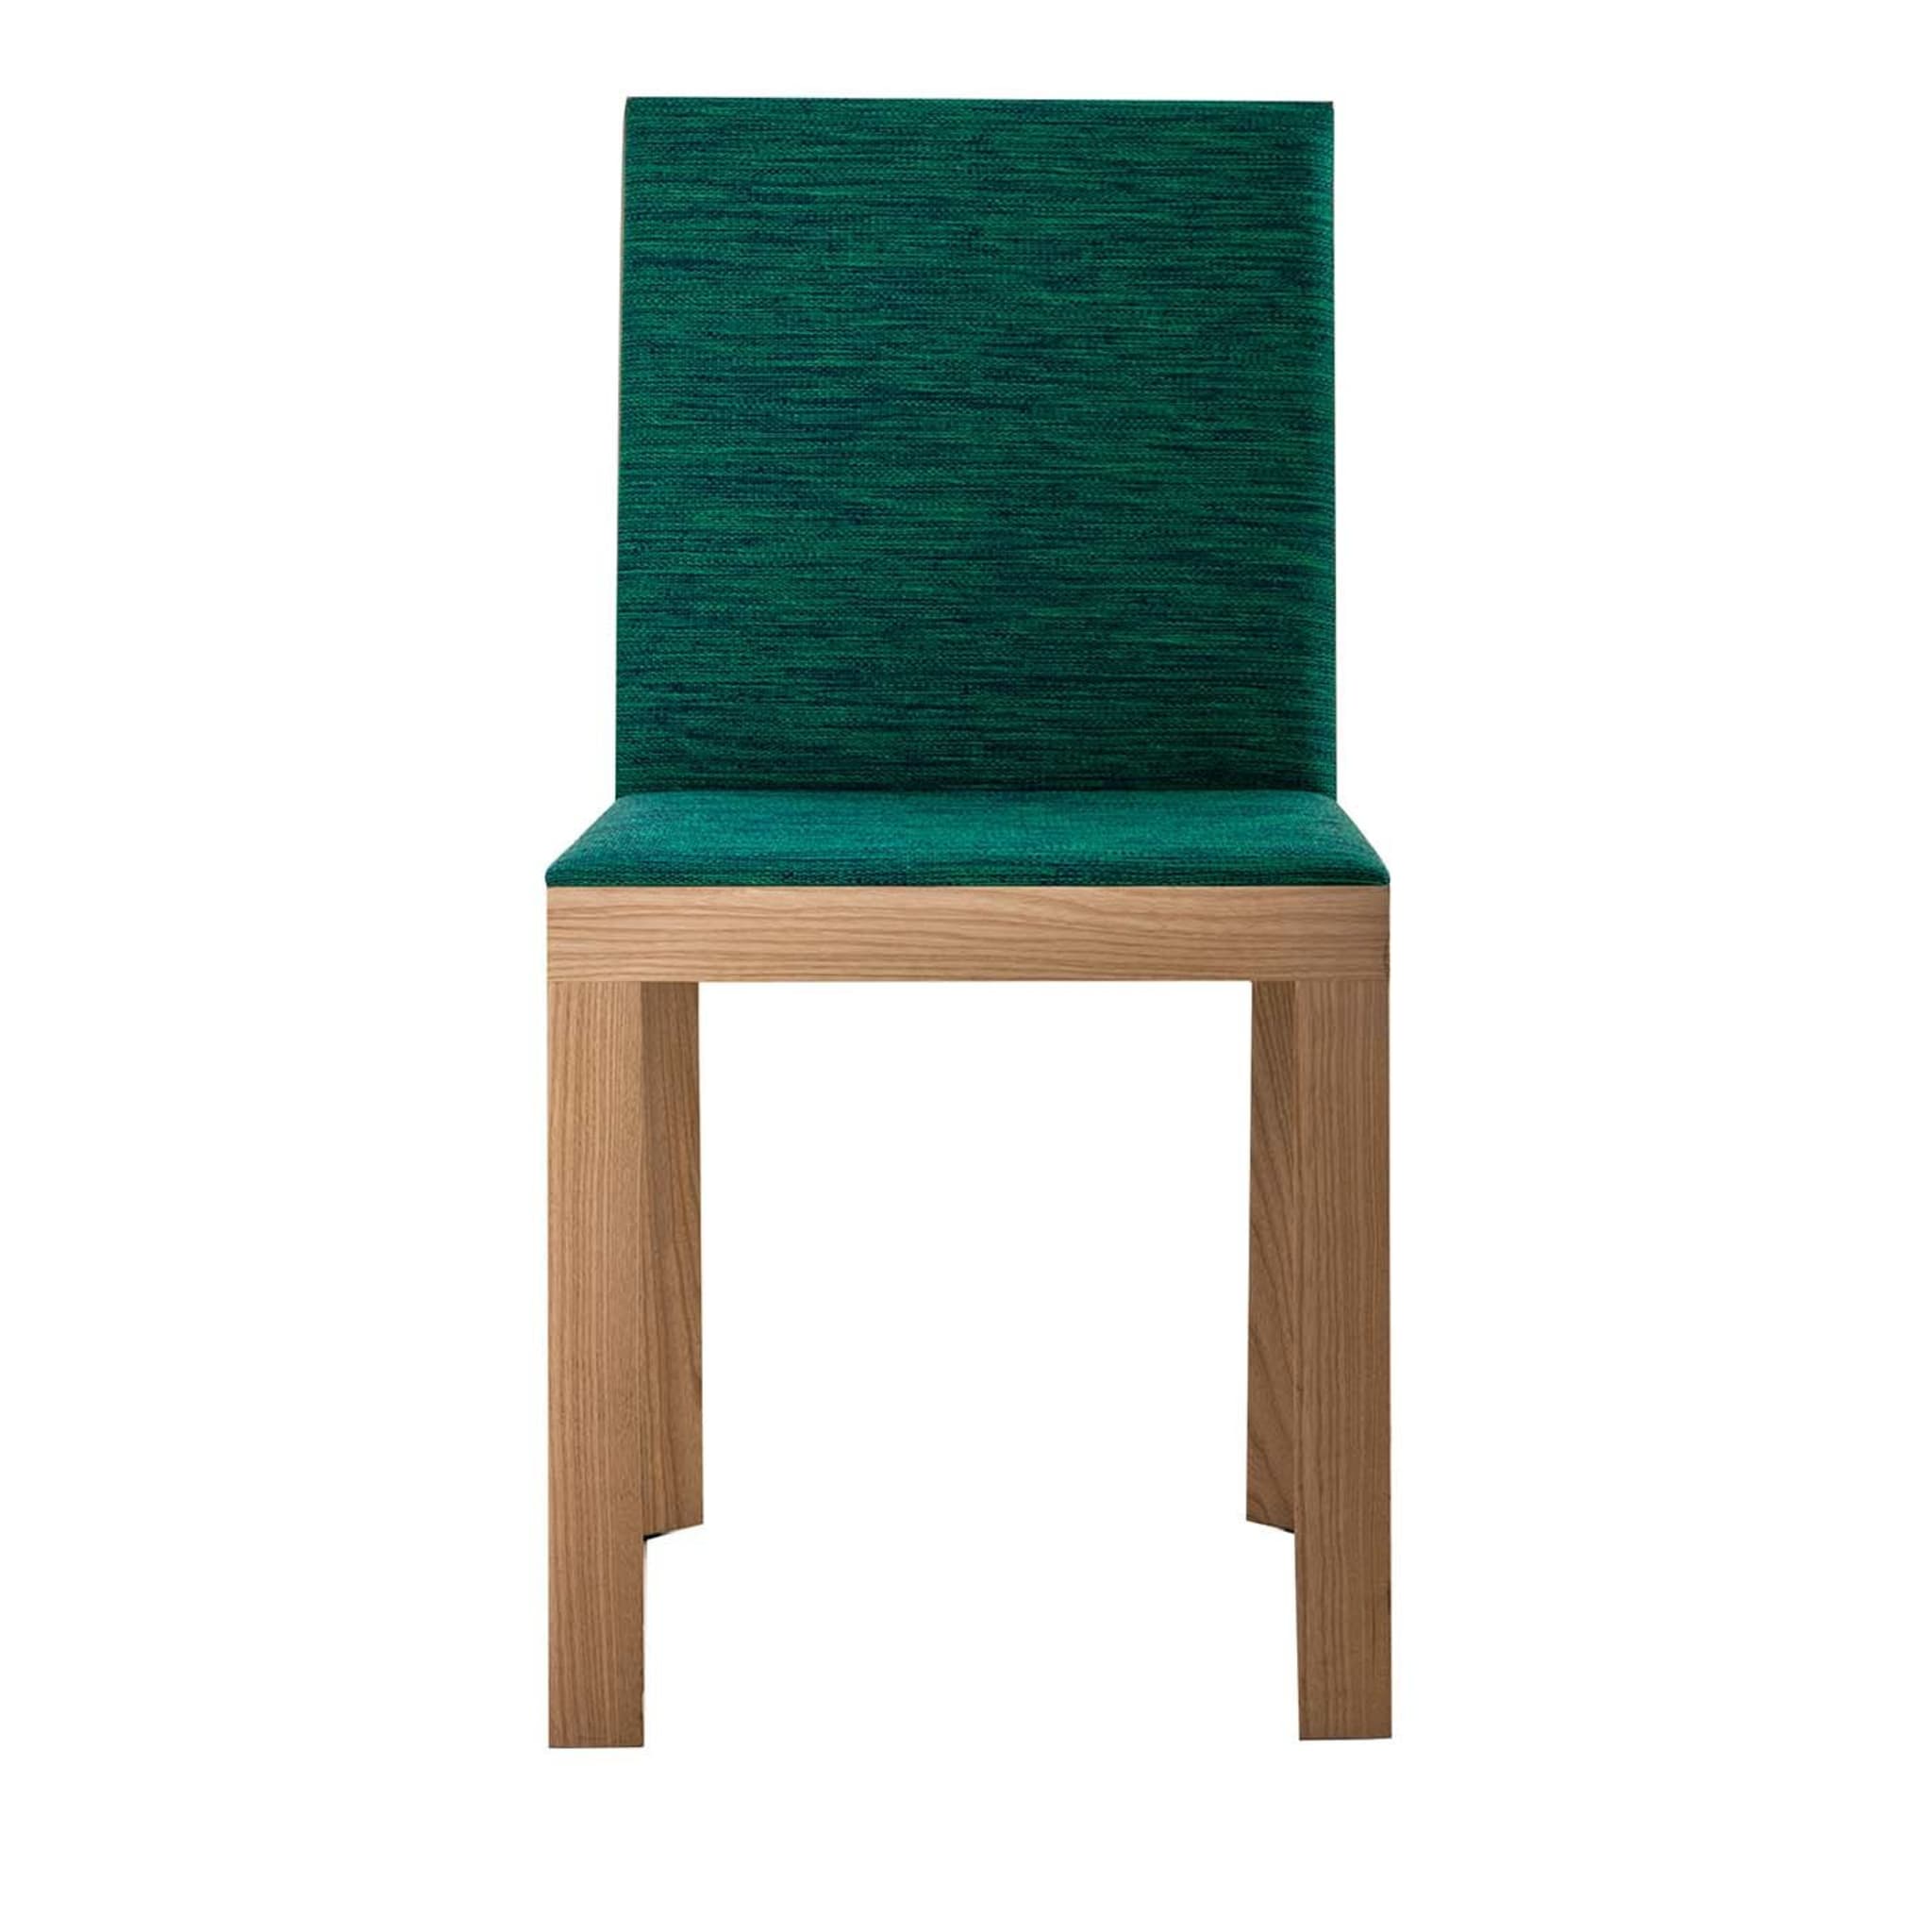 BD 20 L Stuhl von Bartoli Design - Hauptansicht